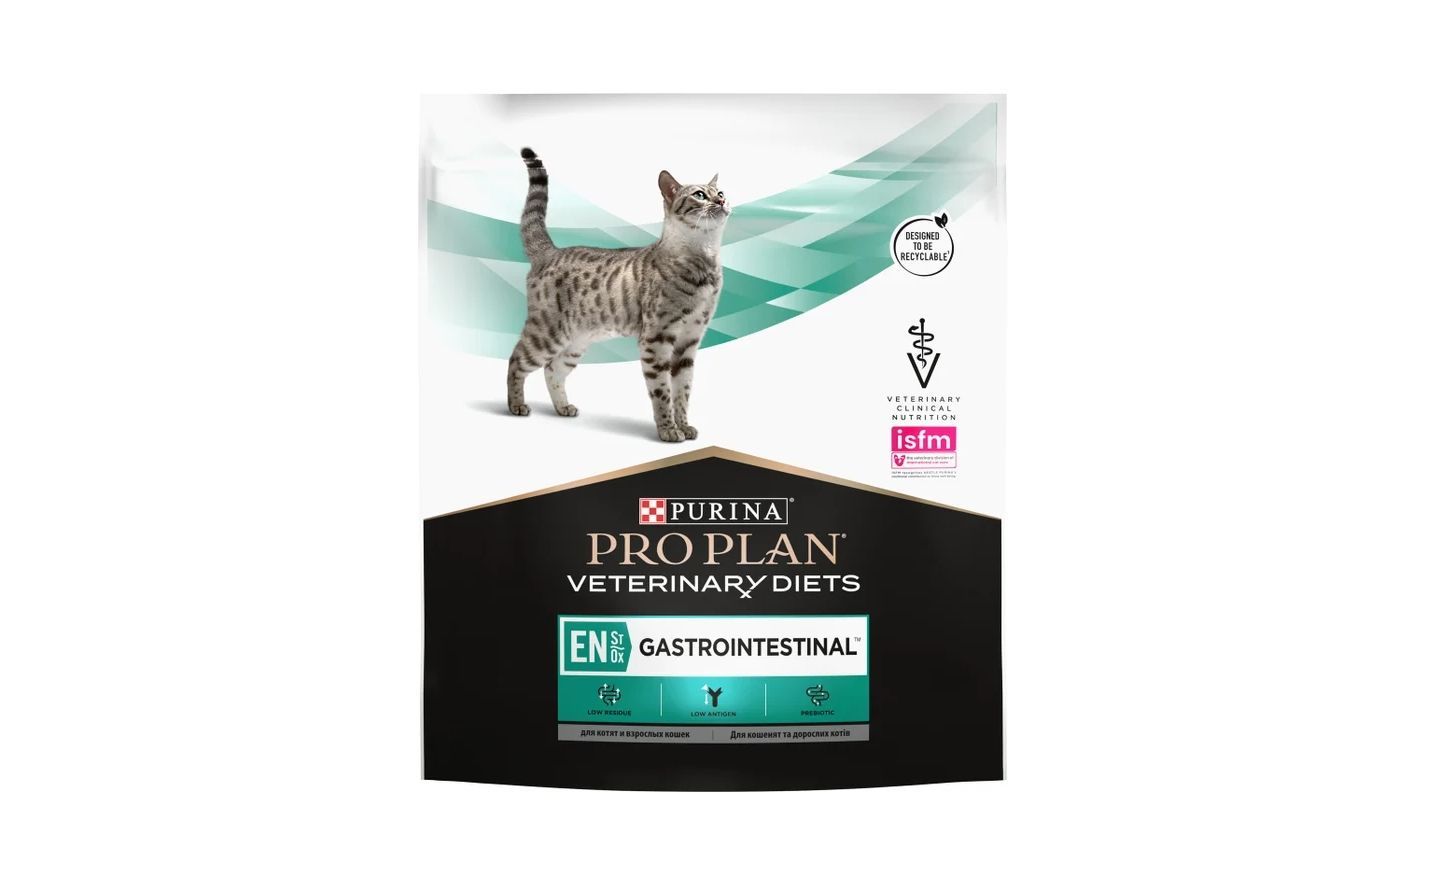 Сухой корм для кошек Pro Plan Veterinary Diets ha Hypoallergenic, гипоаллергенный, 1,3кг. Корм Проплан гастро Интестинал для кошек. Pro Plan® Veterinary Diets en St/Ox Gastrointestinal. Purina Gastrointestinal для кошек. Pro plan en gastrointestinal для собак